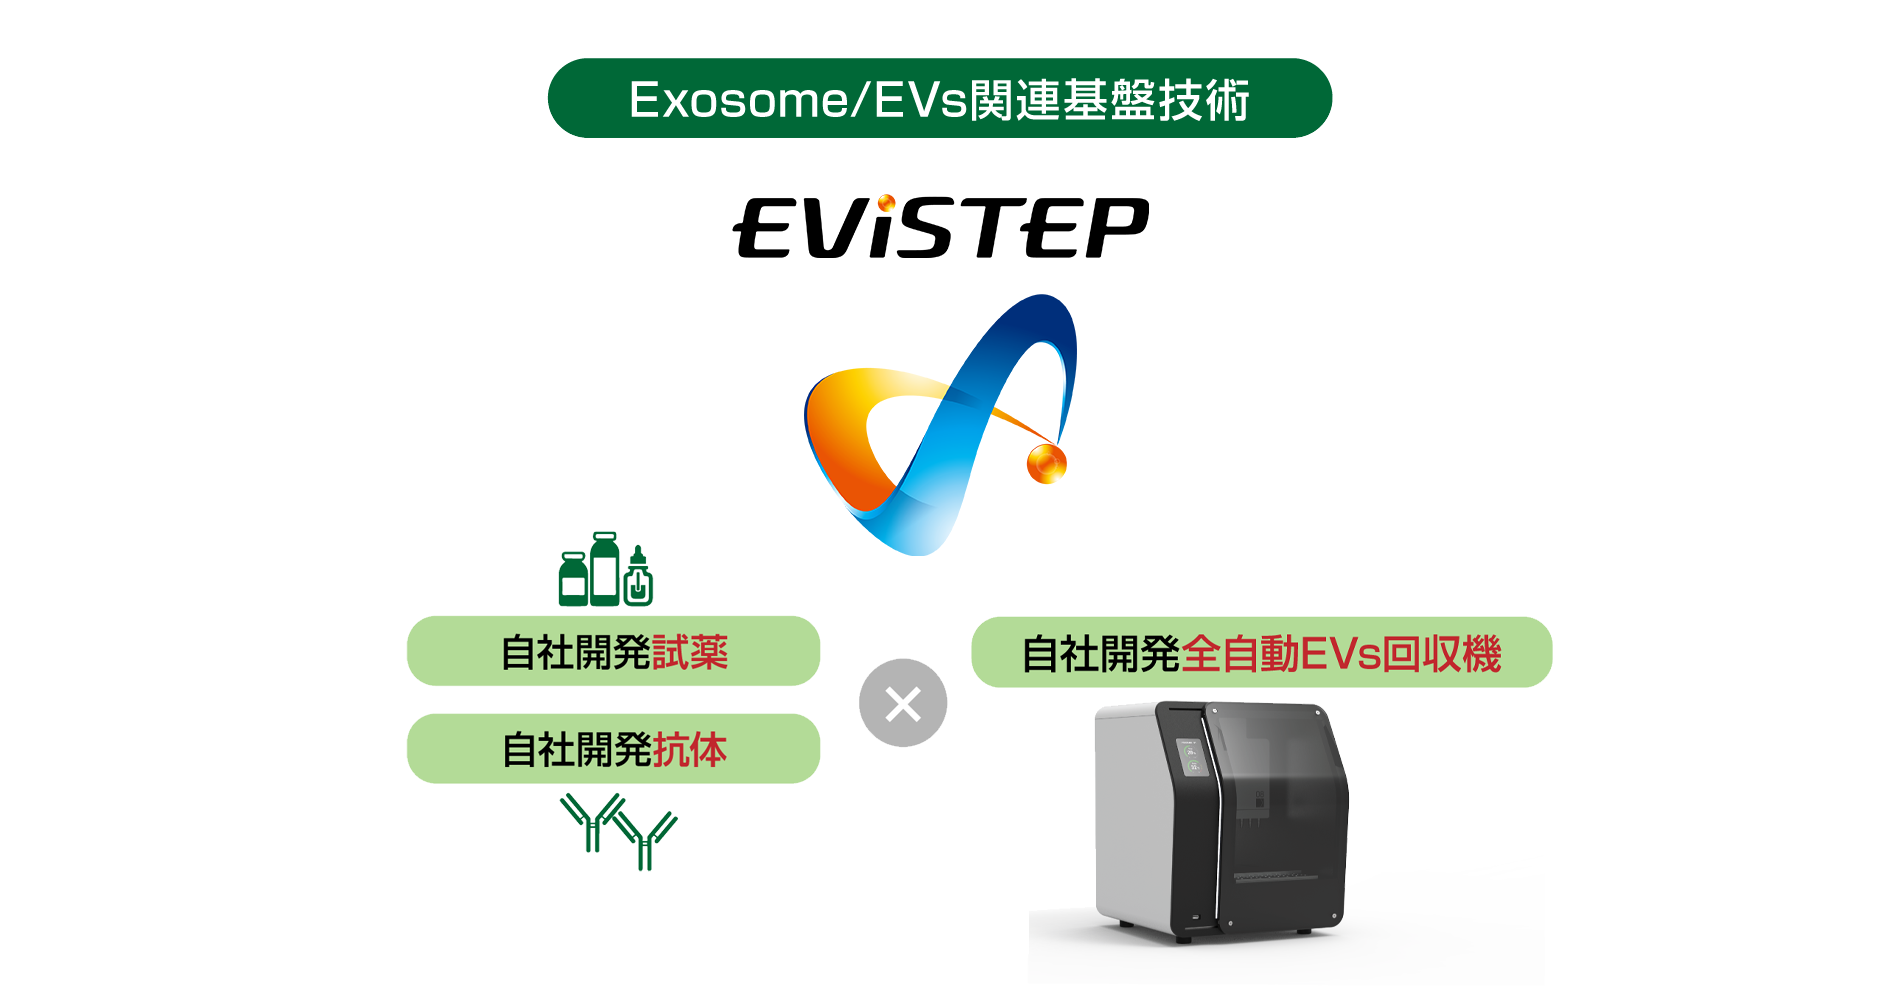 Exosome/Evs関連基盤技術EViSTEP